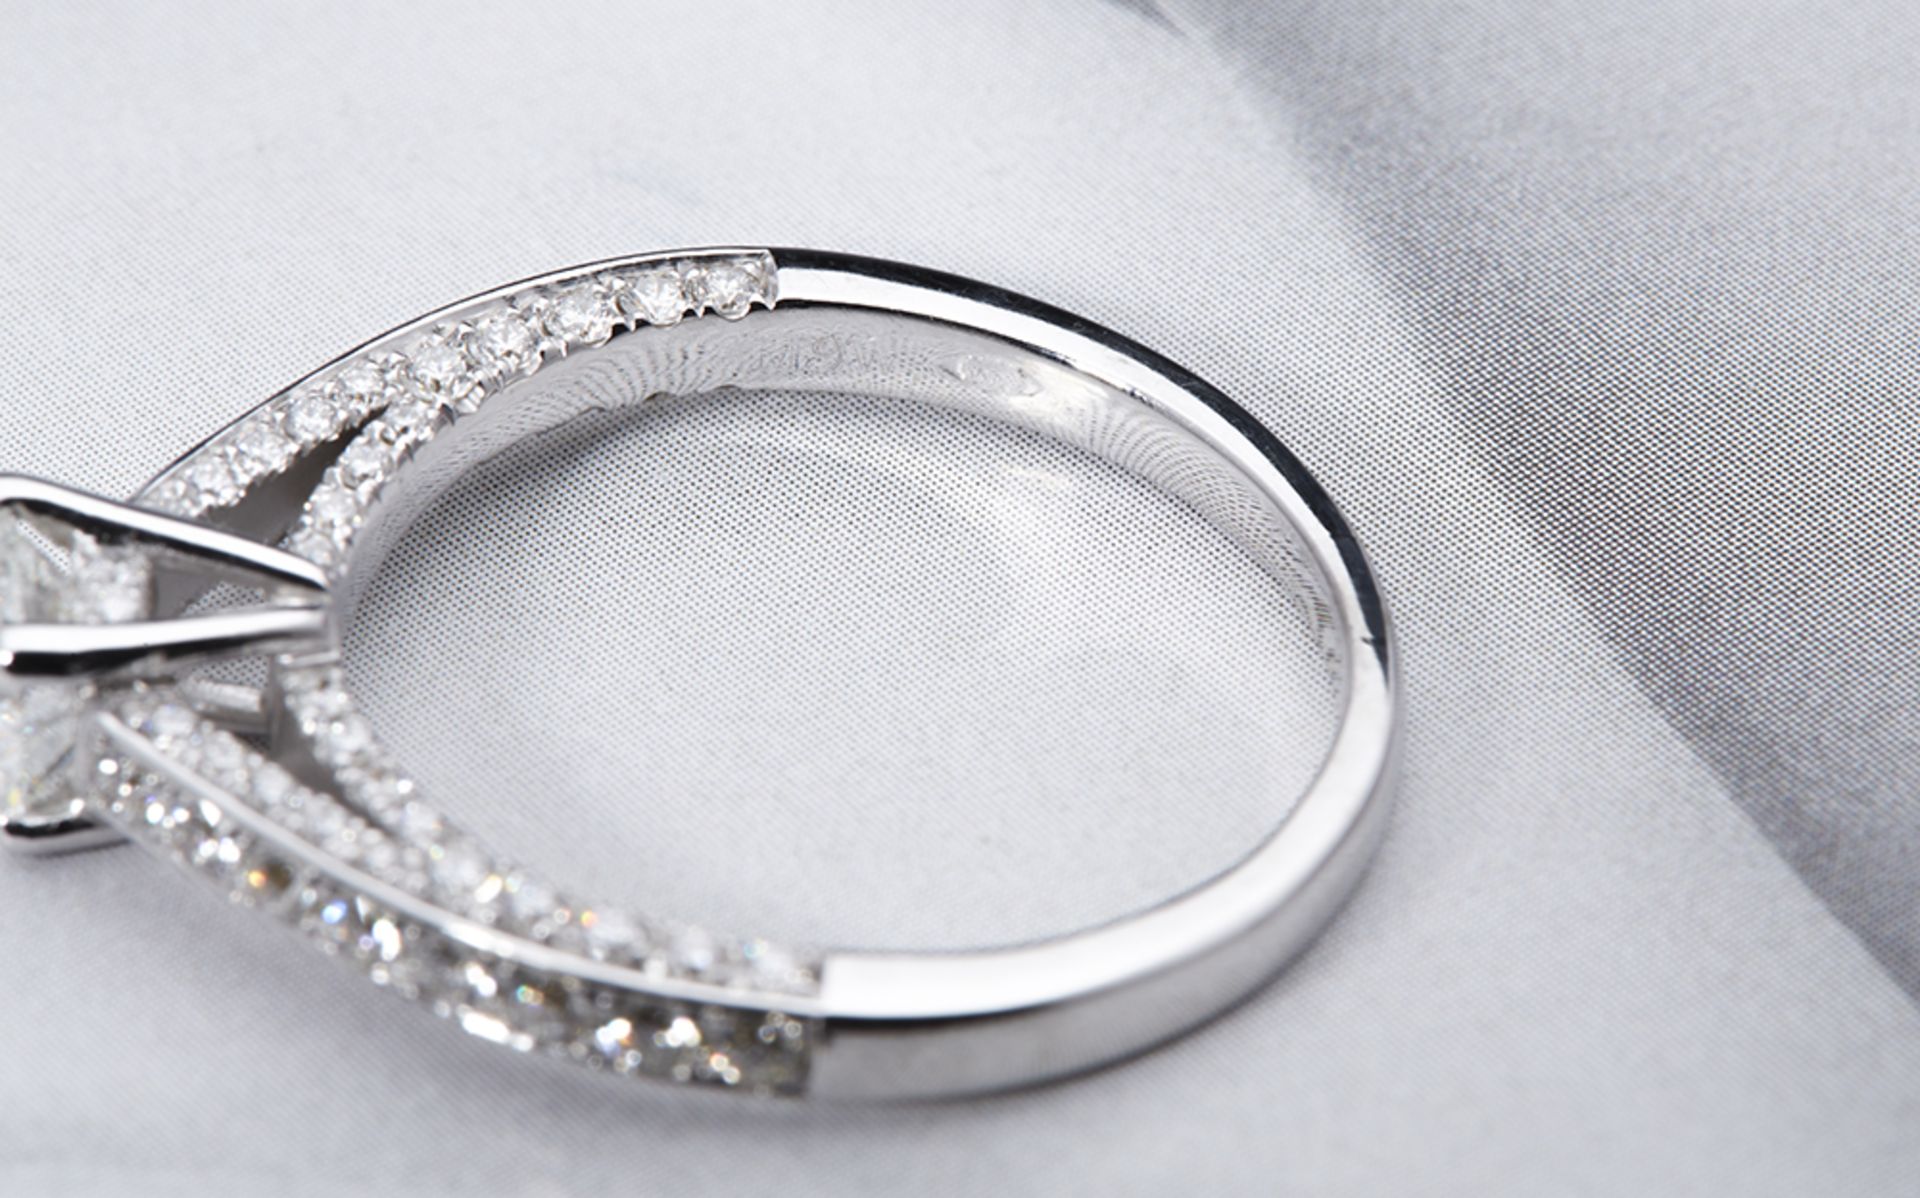 18k White Gold 0.65ct Round Brilliant Cut Diamond Ring - Image 4 of 5